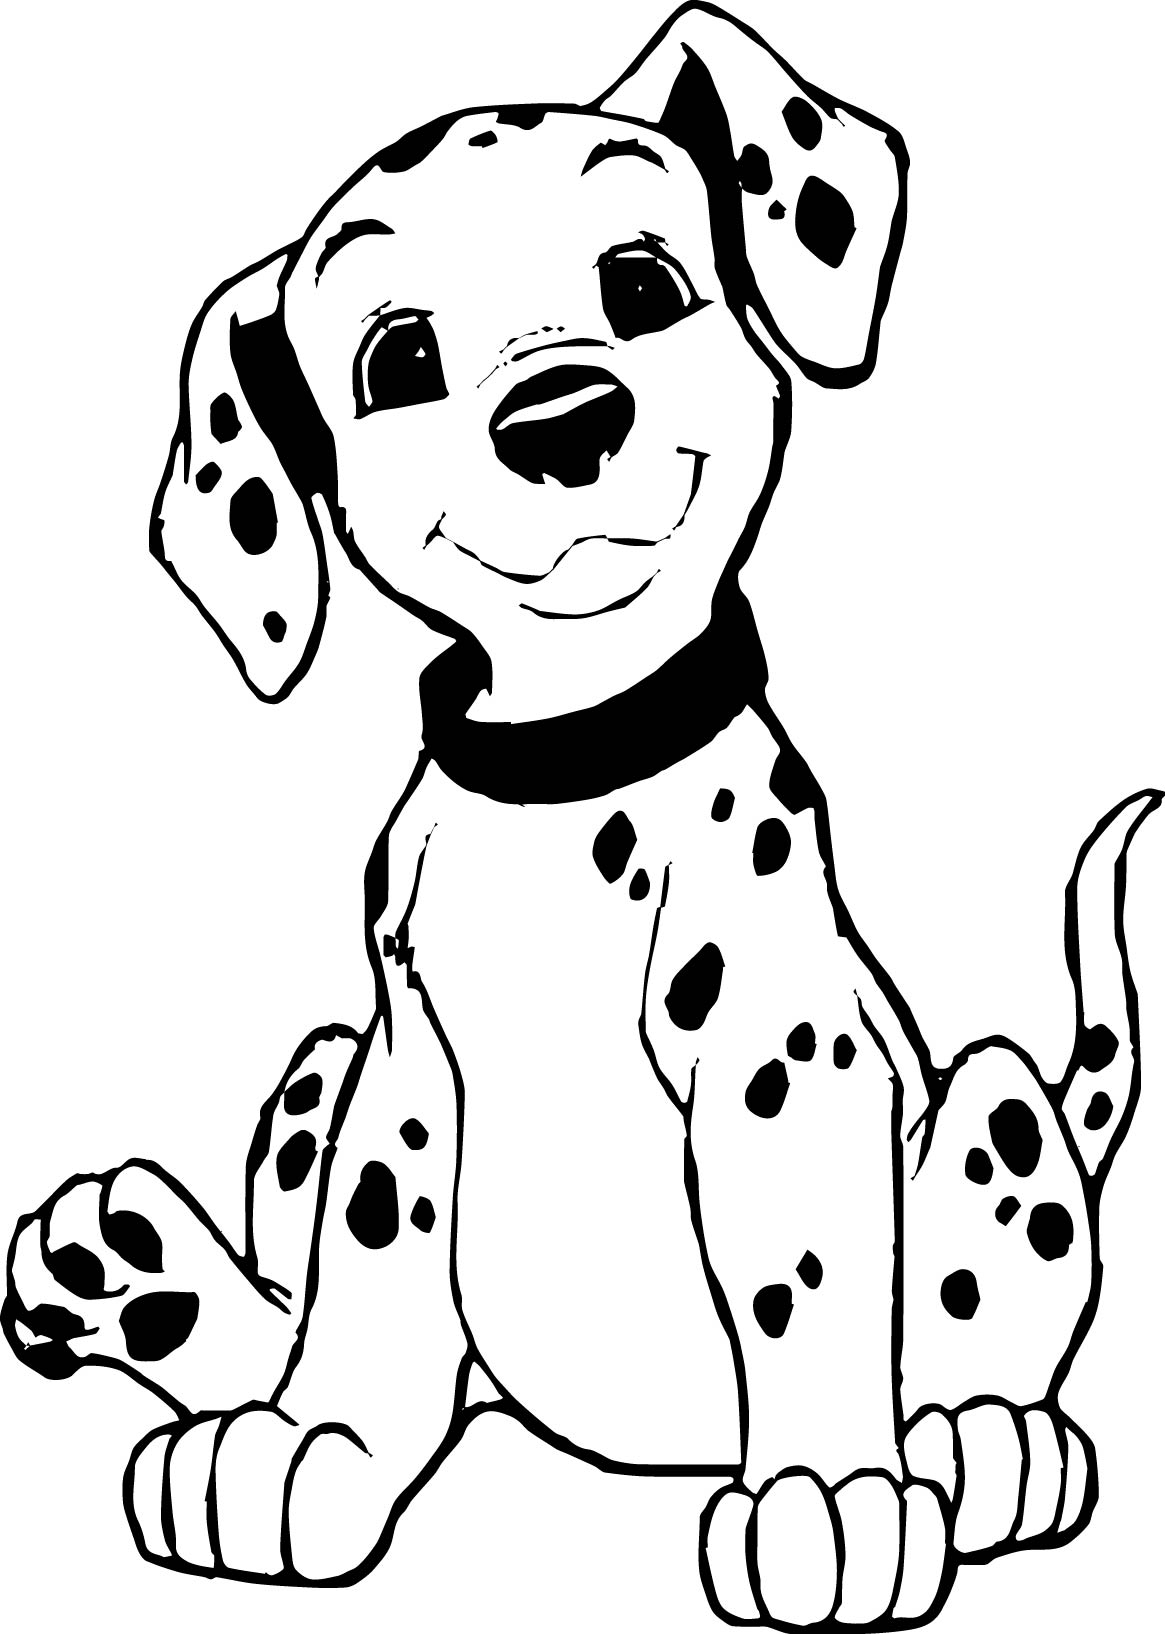 Dalmatian Dog Coloring Page at GetColorings.com | Free printable